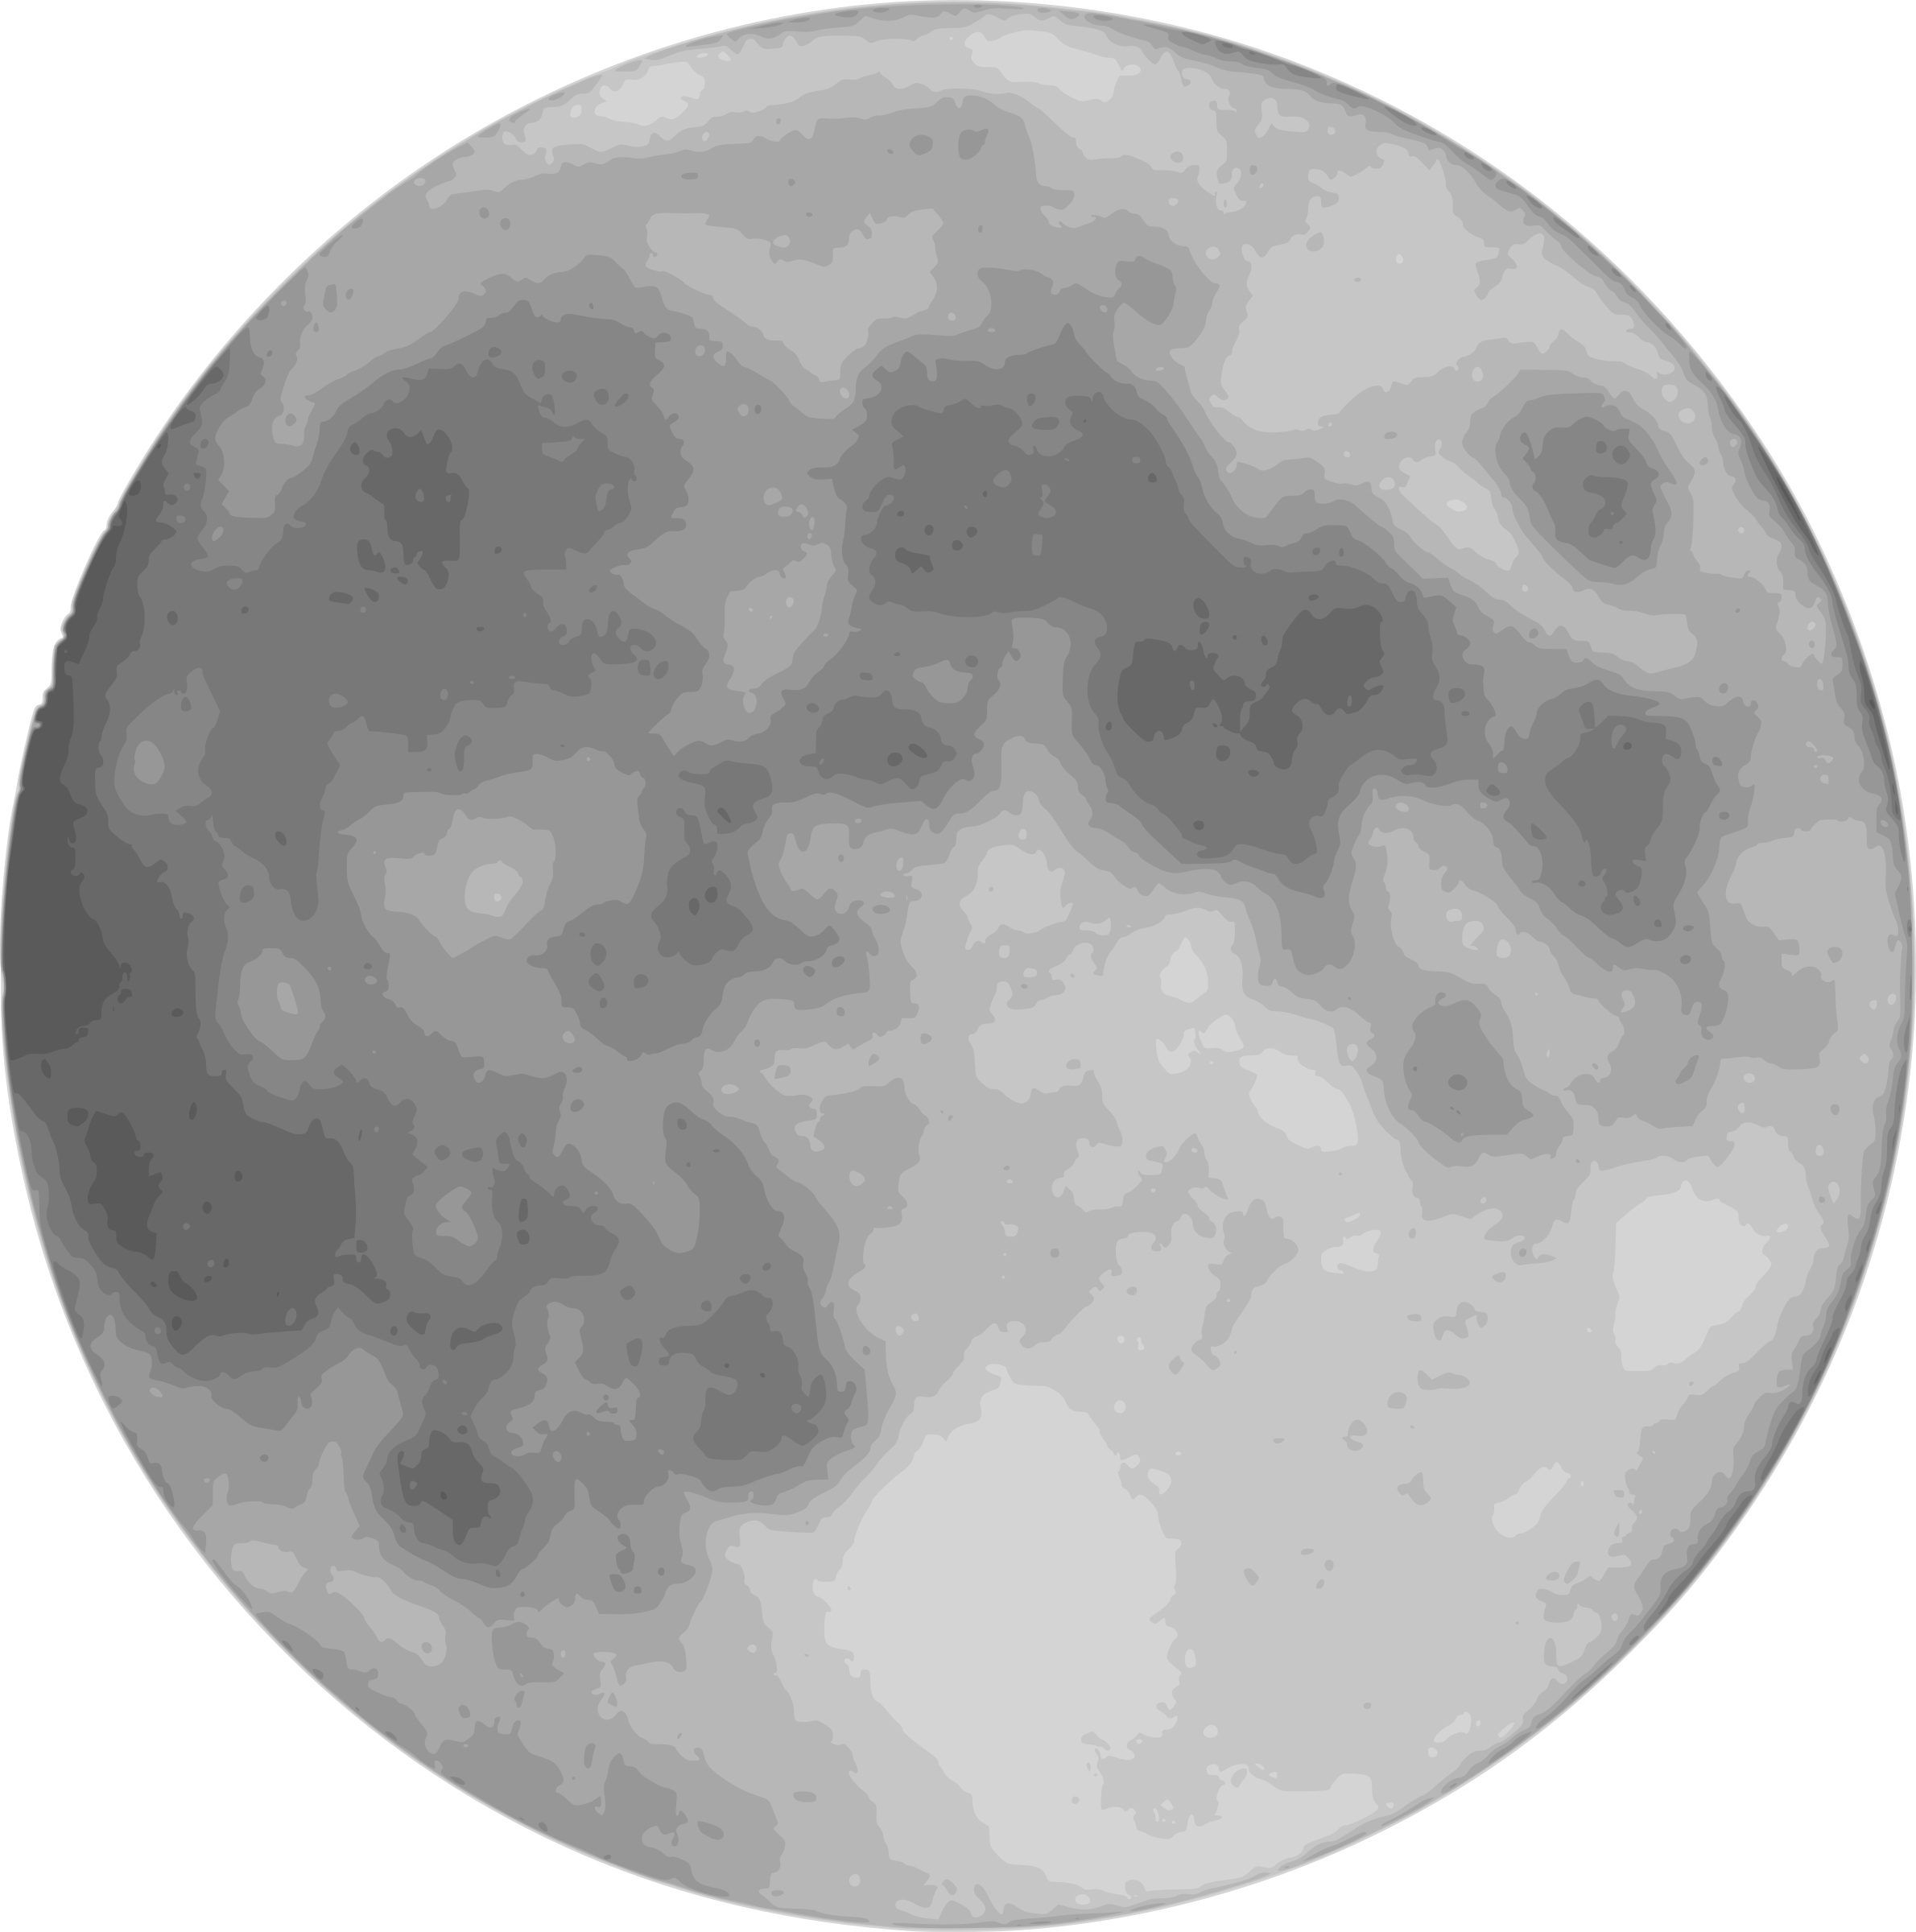 Cartoon Moon PNG Image